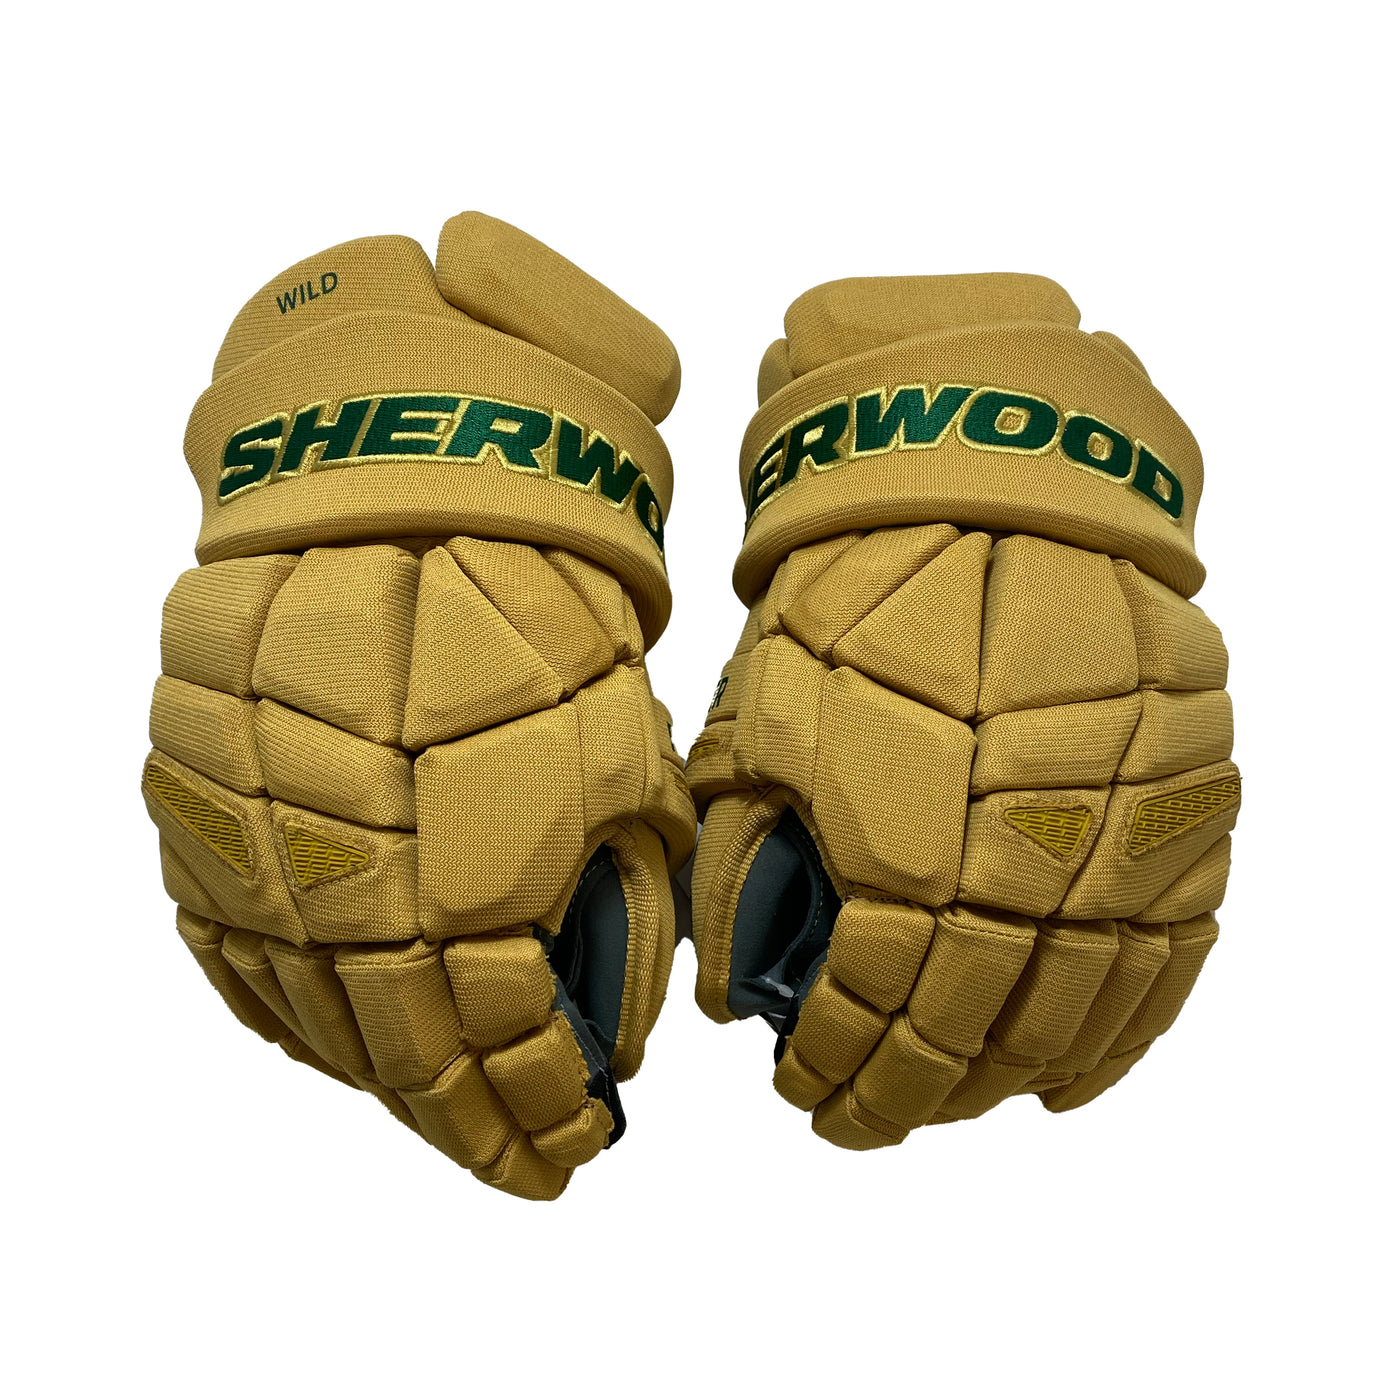 Sherwood Rekker Legend One Pro - Pro Stock Gloves - Minnesota Wild (Winter Classic)